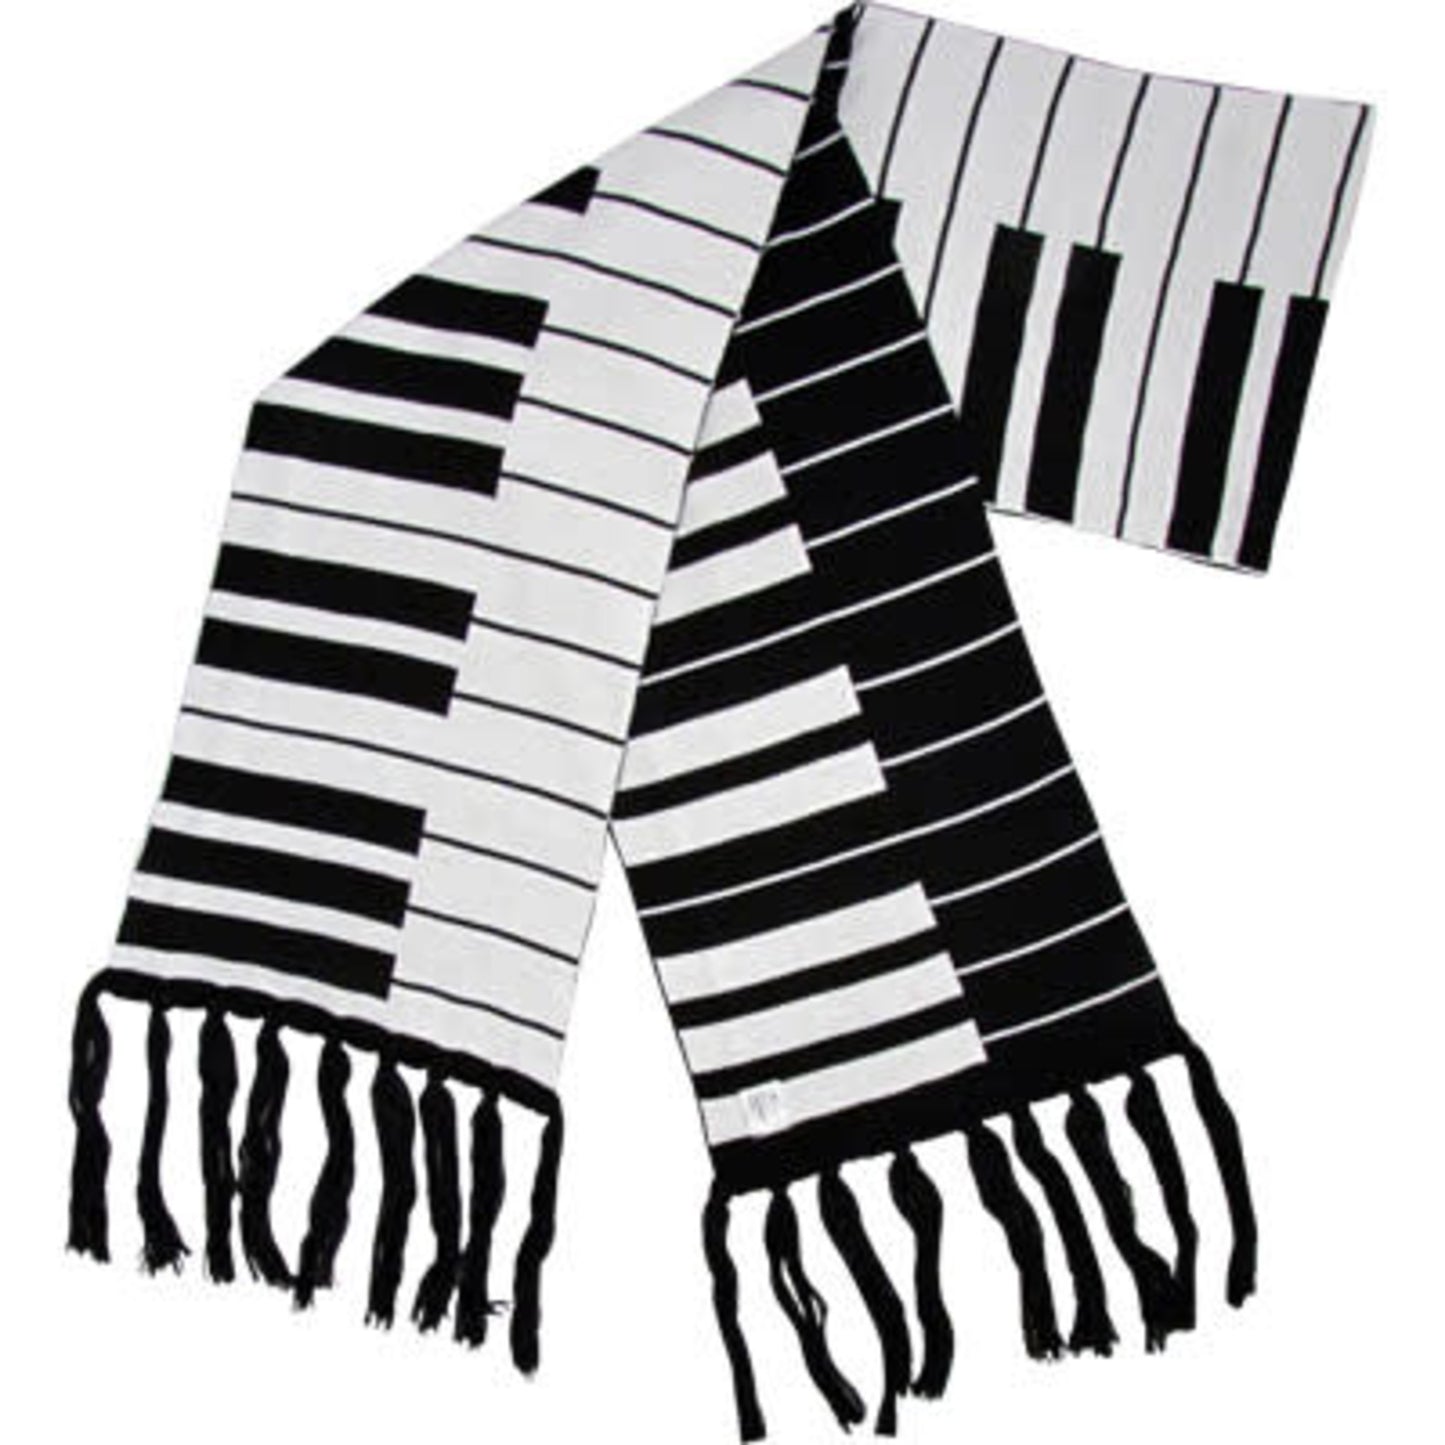 Piano Keys Knit Scarf